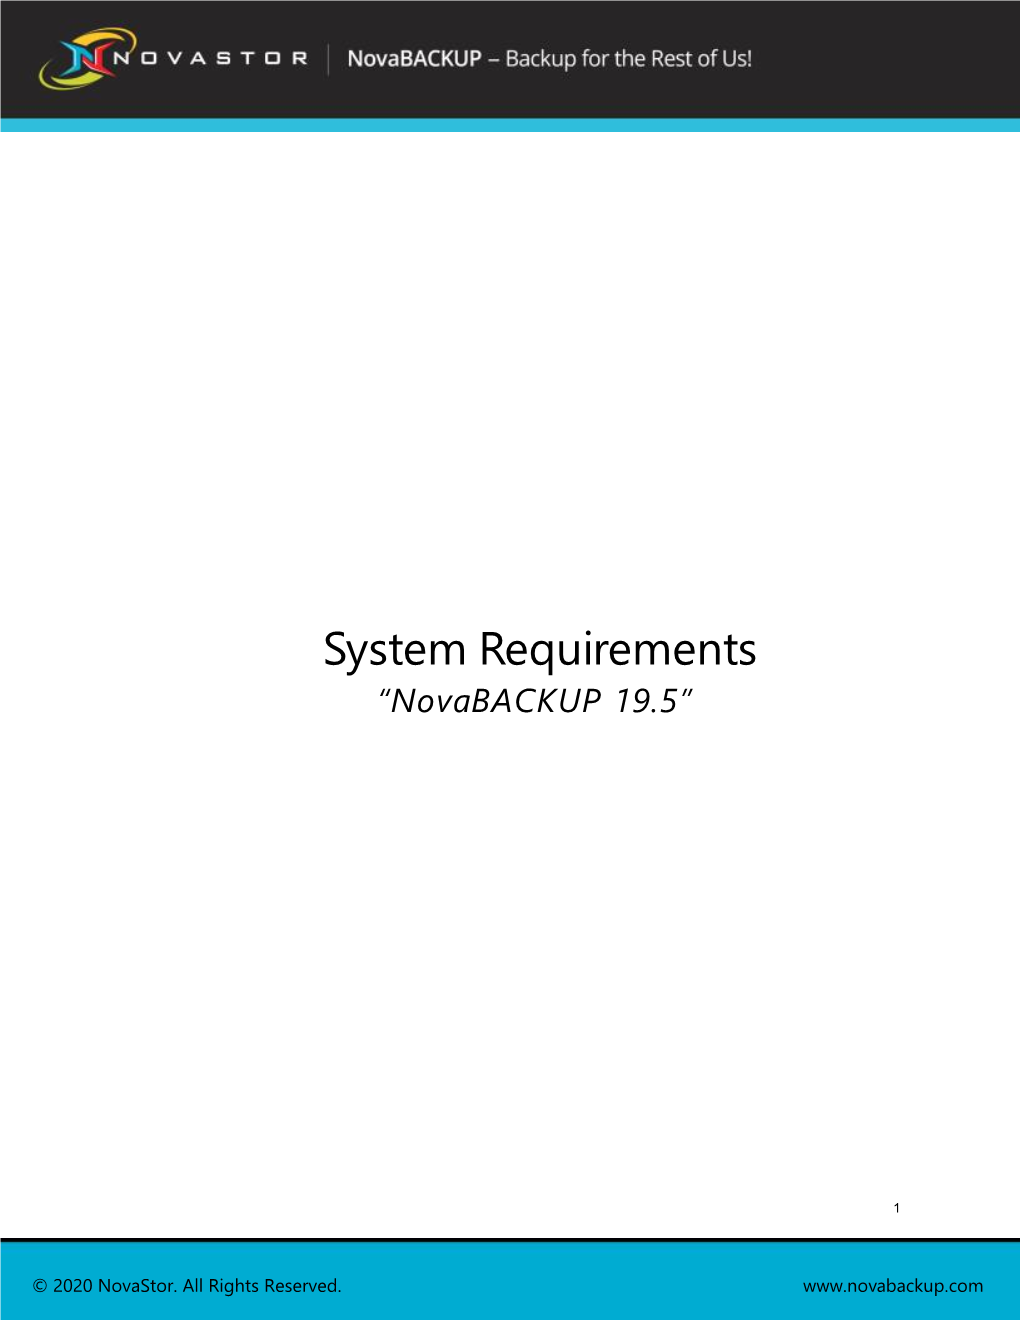 System Requirements “Novabackup 19.5”